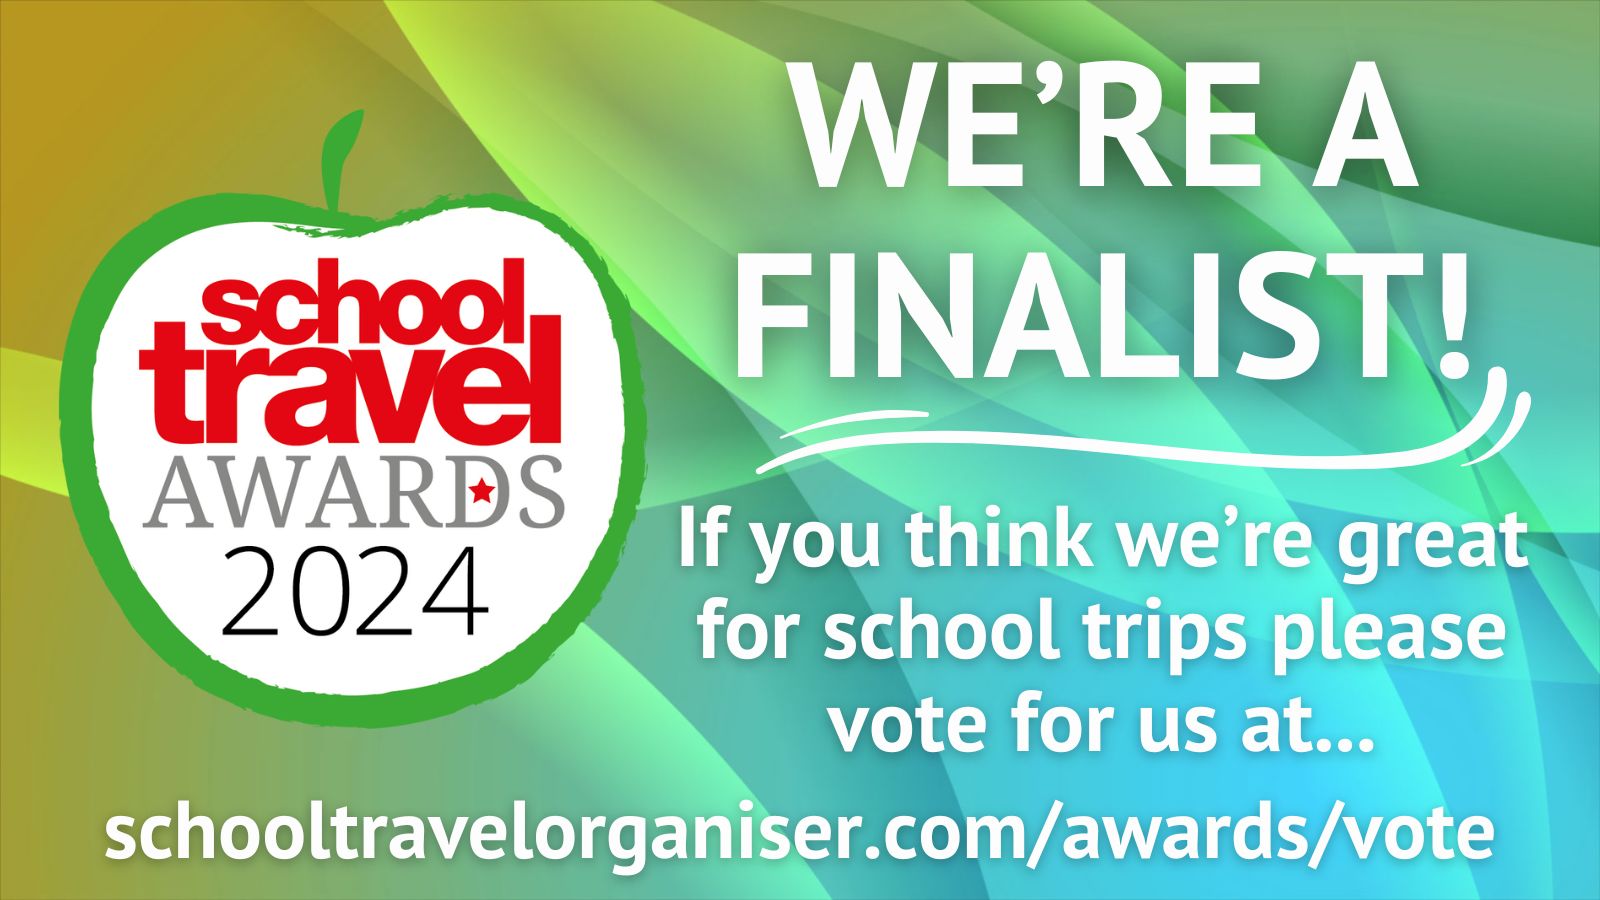 School Travel Awards 2024 Finalist Vote X (Twitter) Post